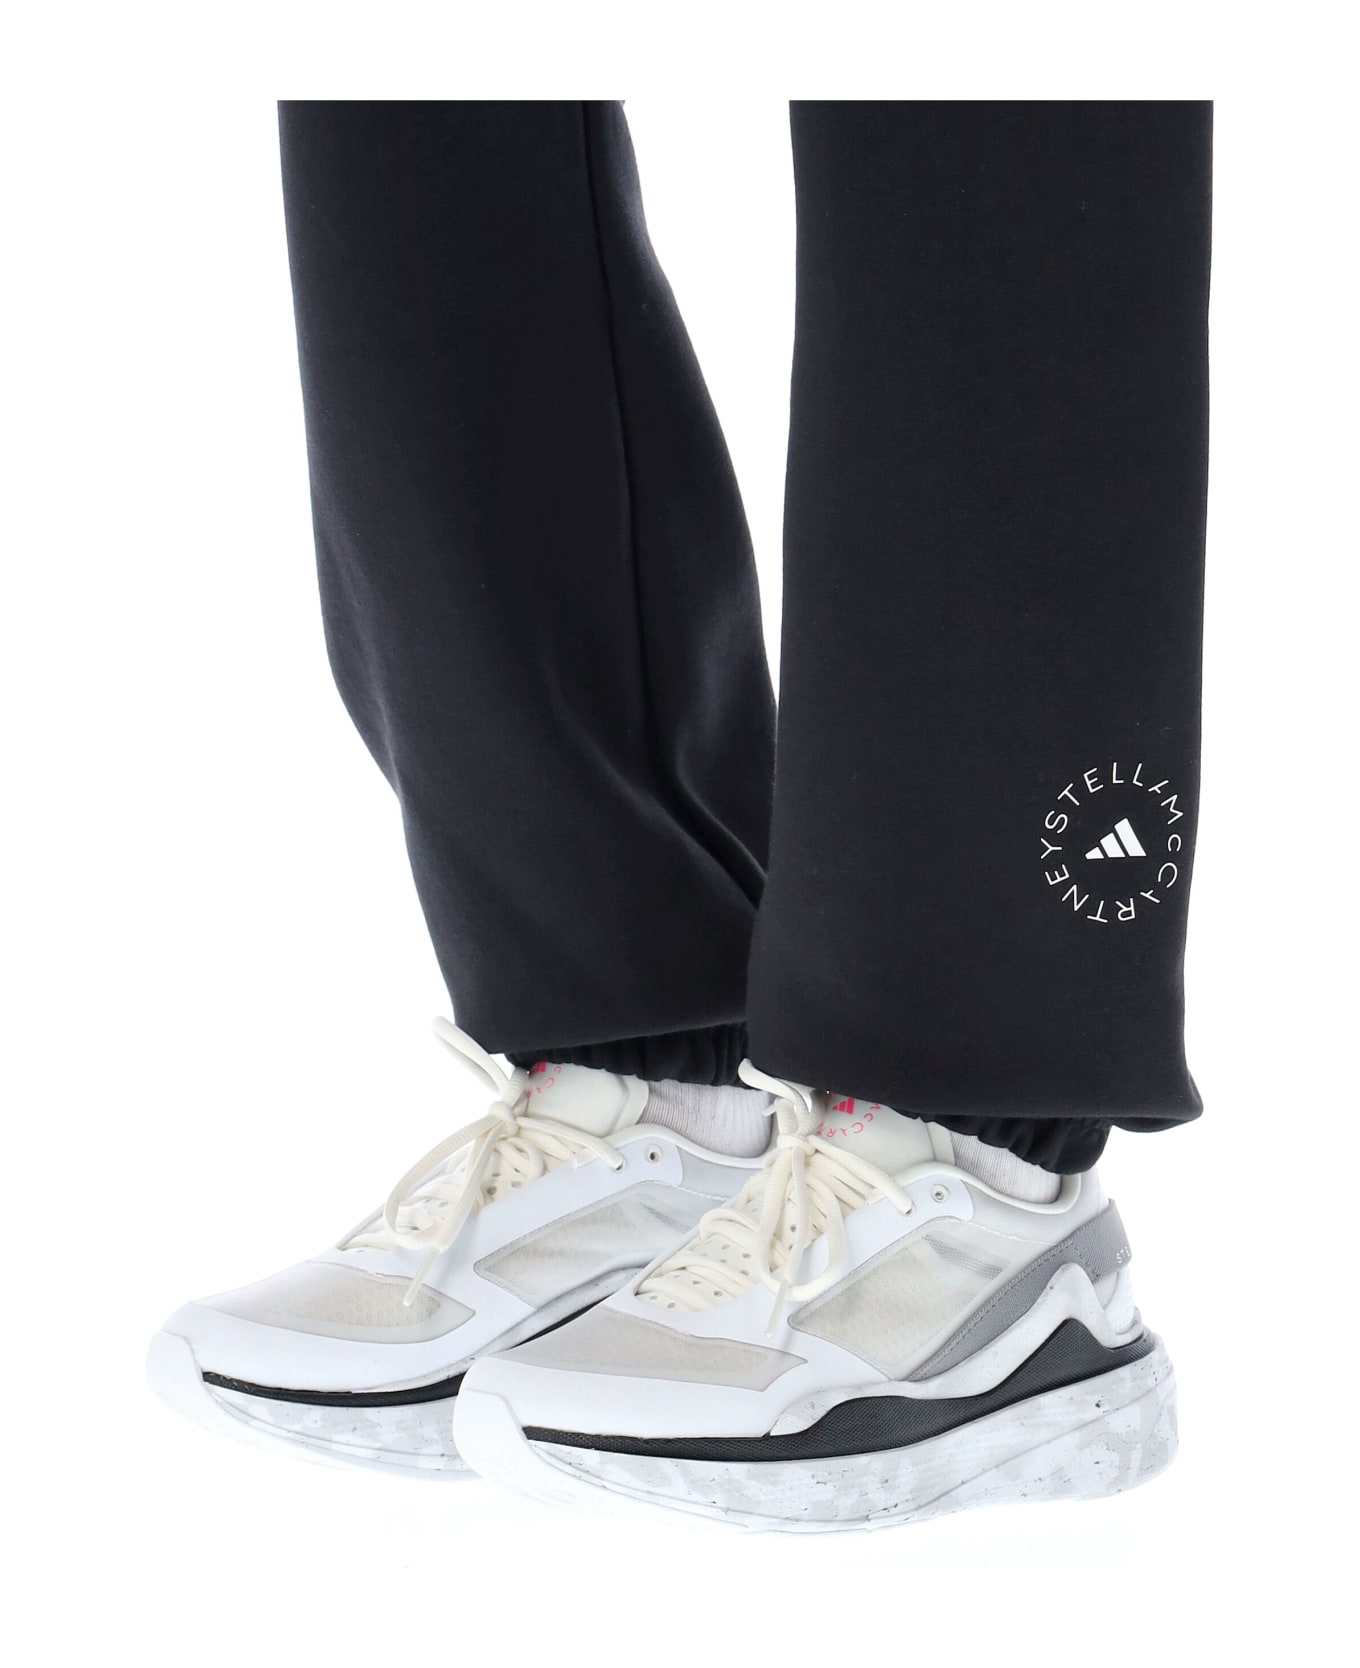 Adidas by Stella McCartney Sweat Tracksuit Bottoms - BLACK